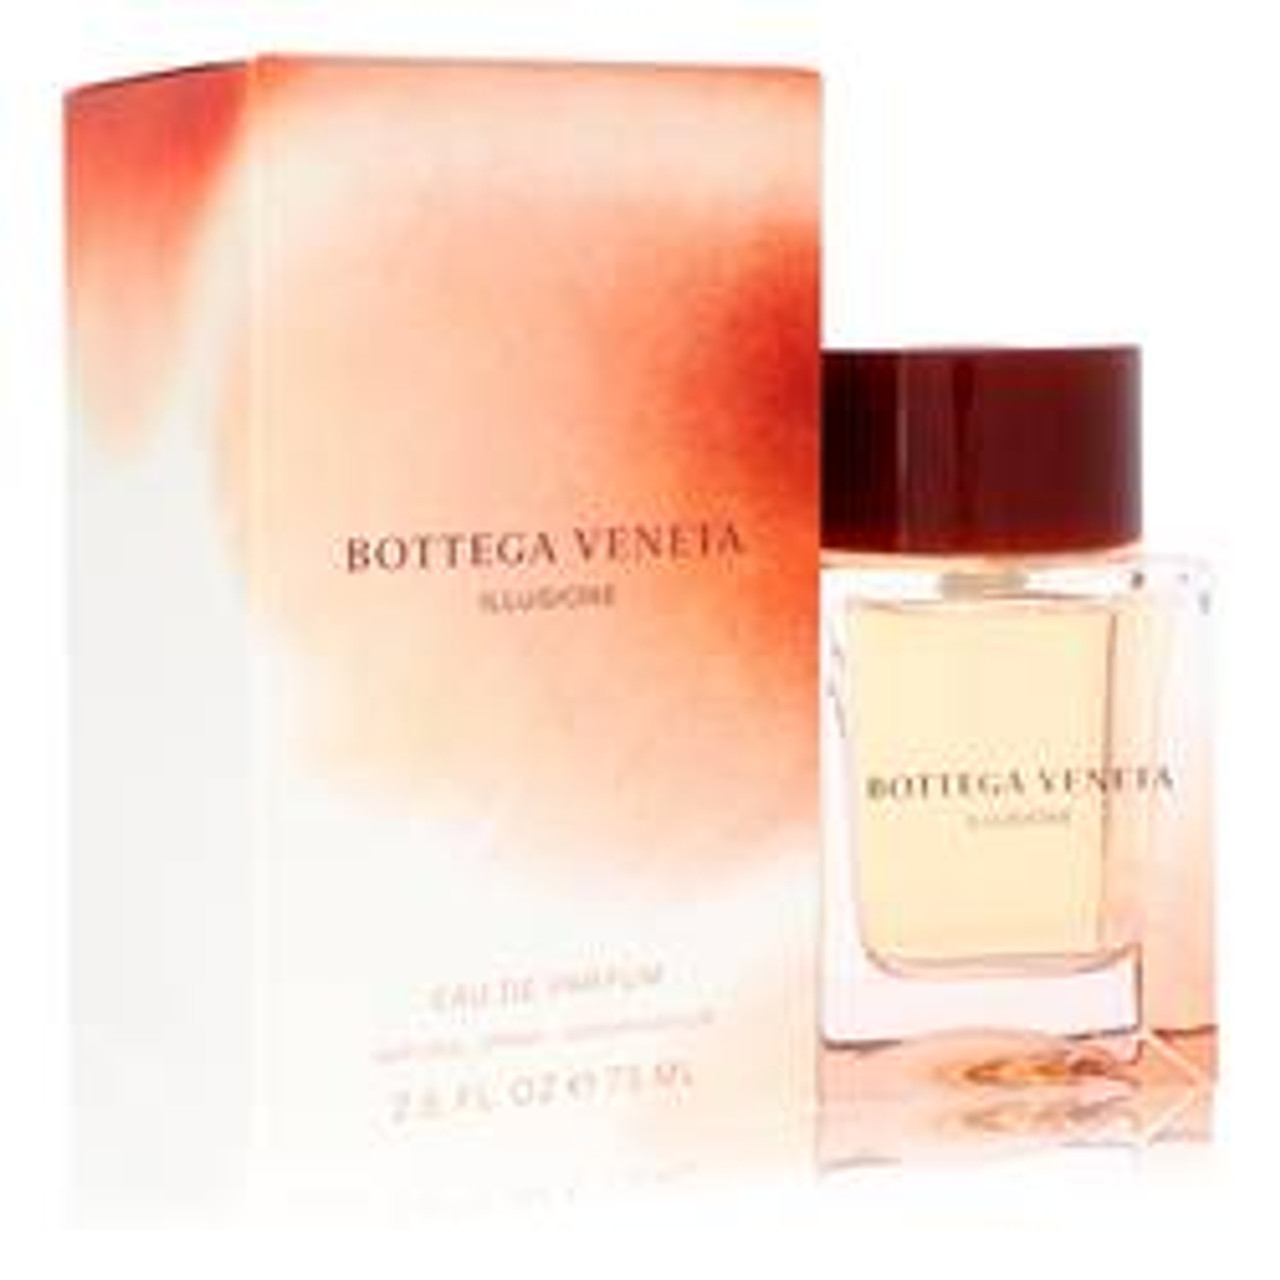 Bottega Veneta Illusione Perfume By Bottega Veneta Eau De Parfum Spray 2.5 oz for Women - *Pre-Order